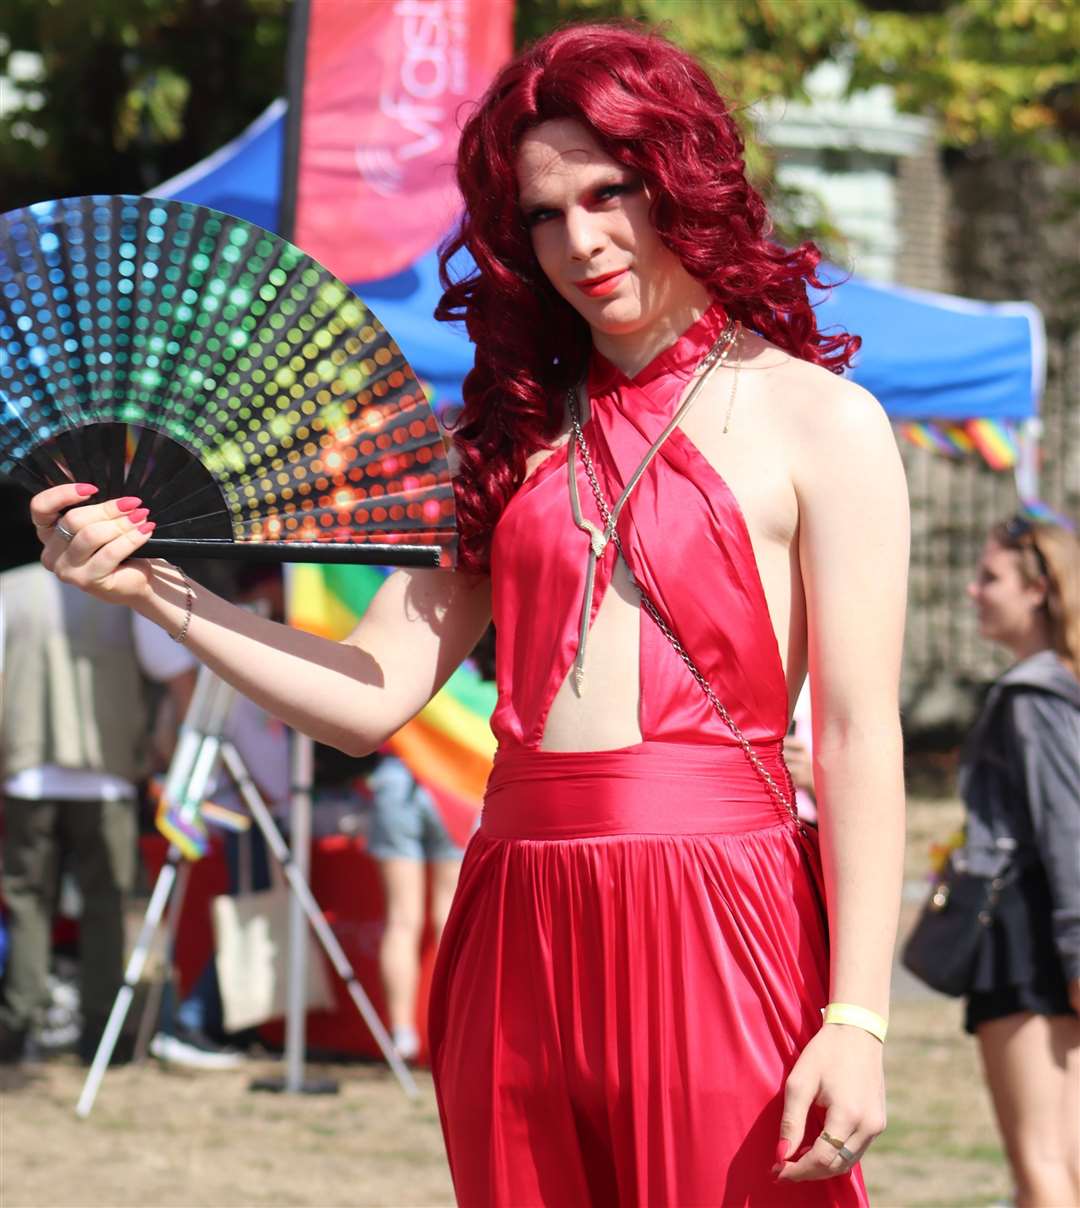 It was a celebration of the LGBTQ+ community. Picture: Rachel Evans